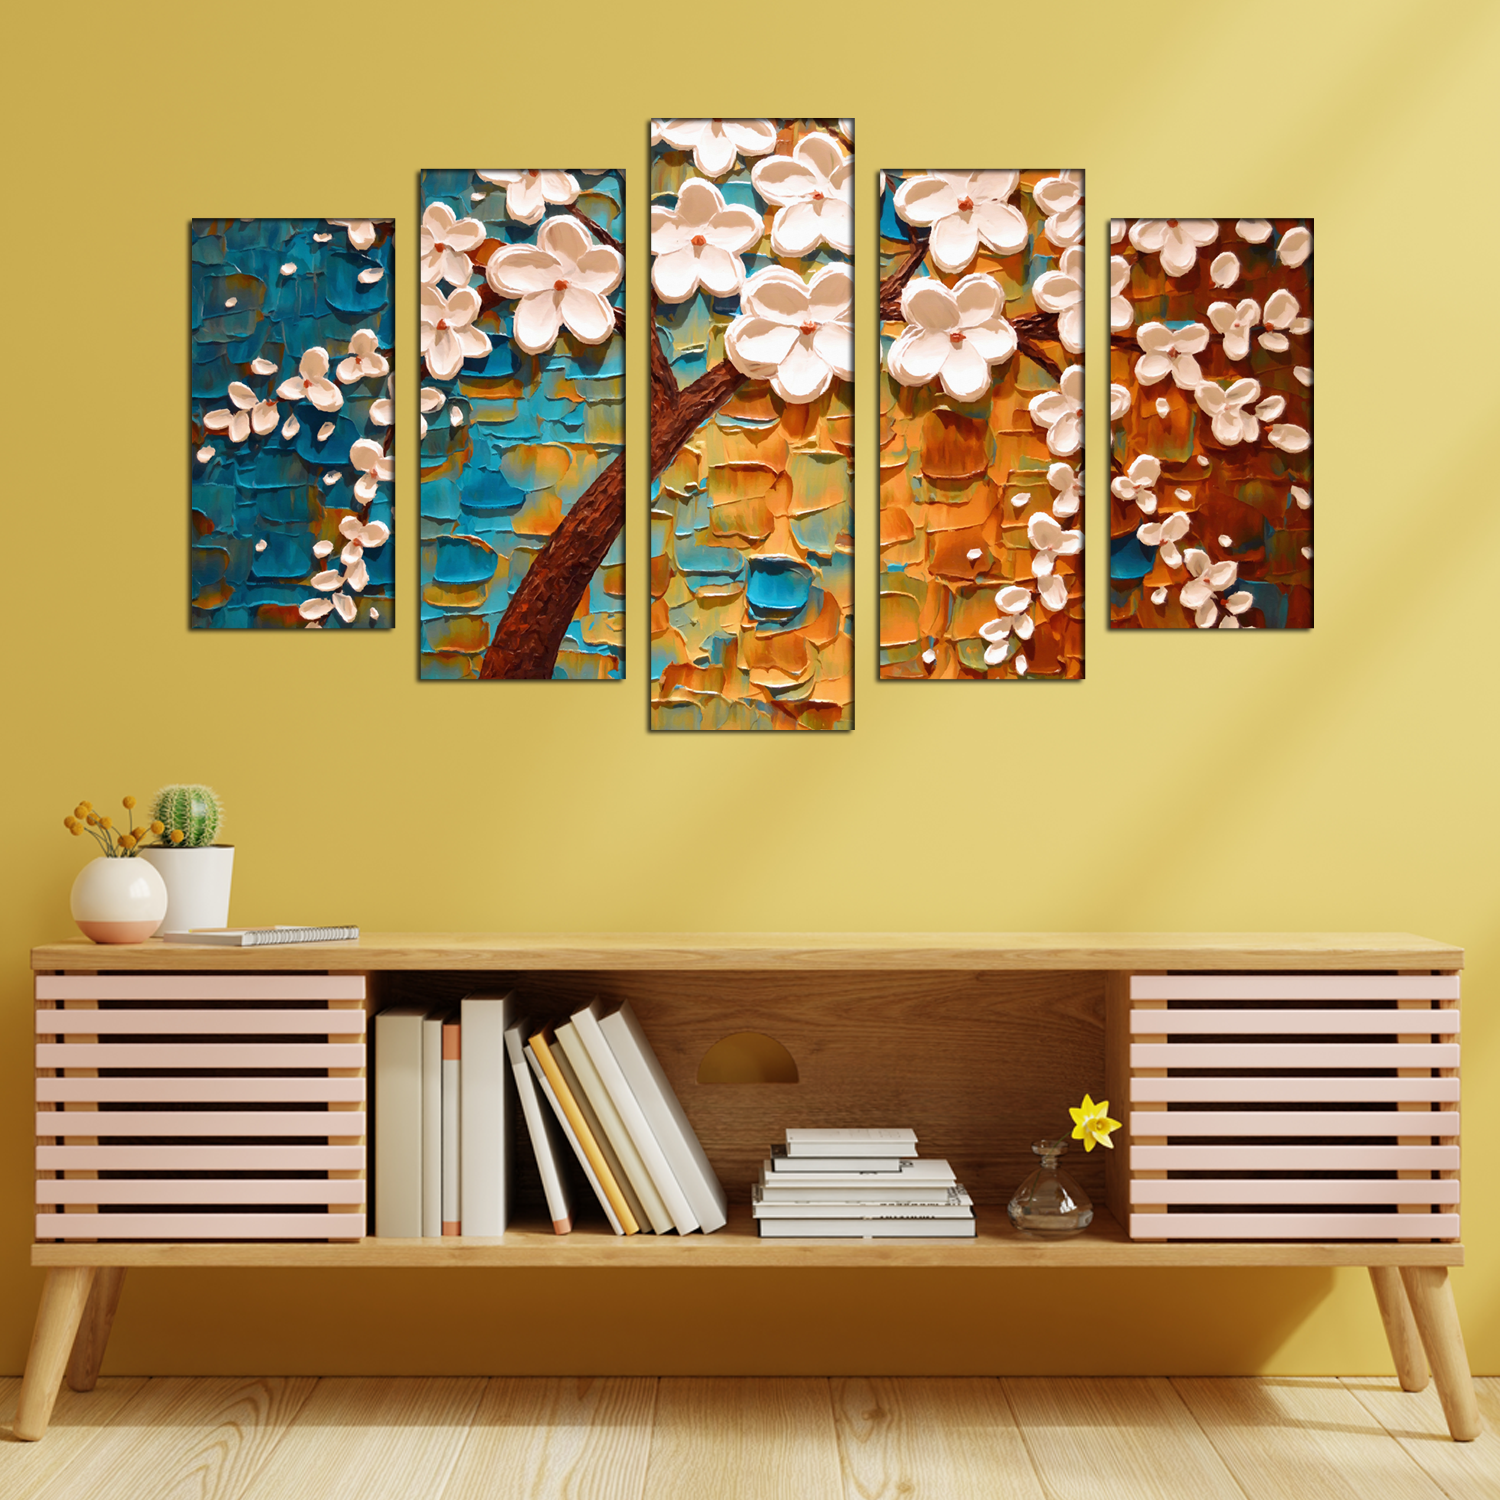 wood frames for canvas art